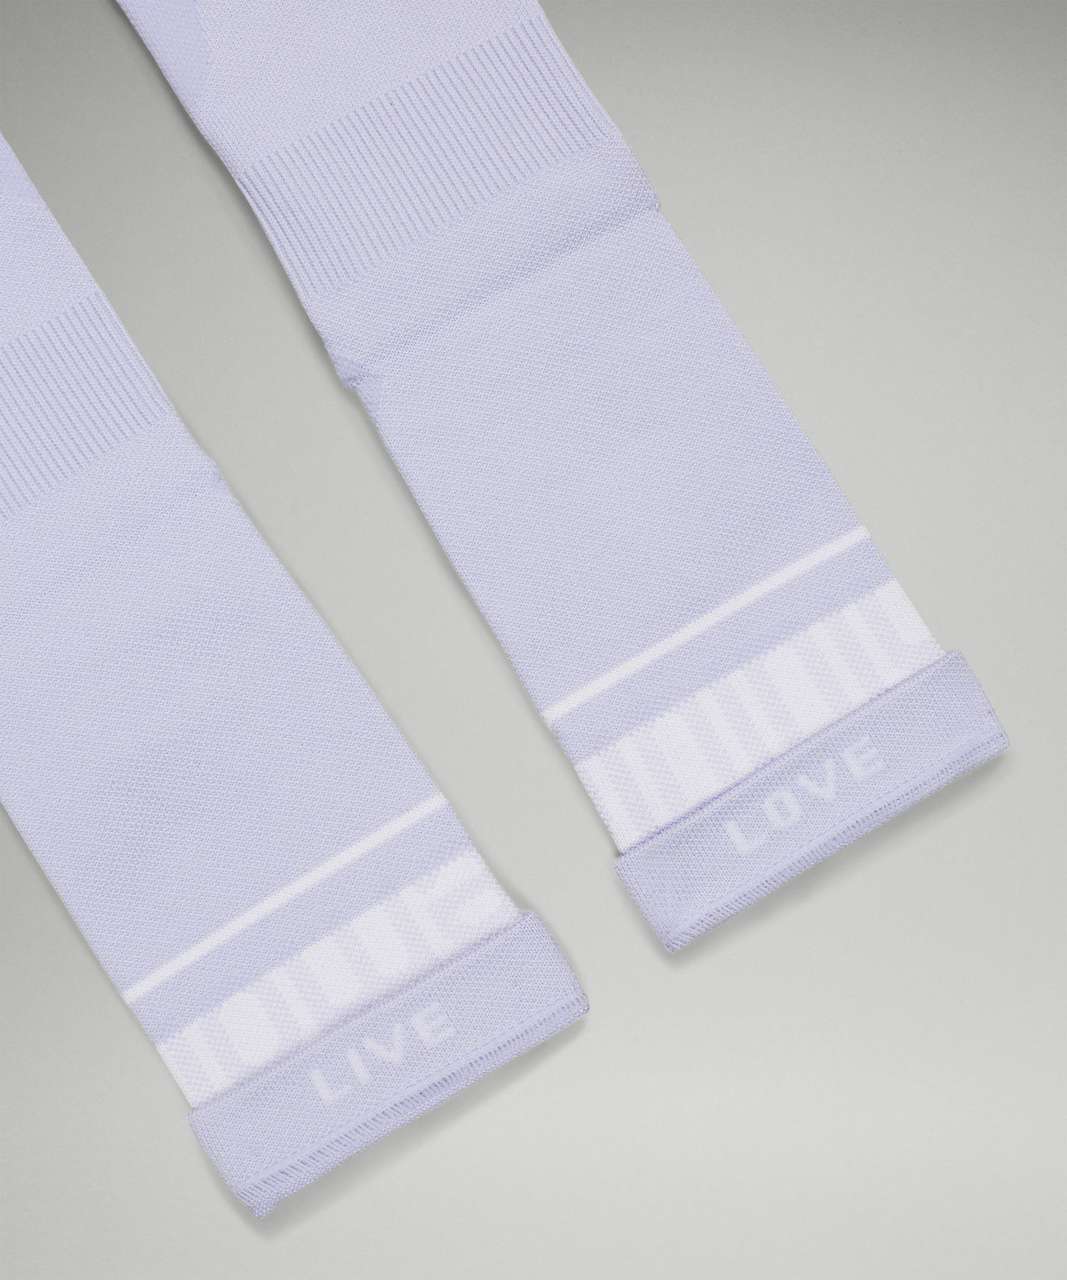 Lululemon Power Stride Crew Sock 3 Pack *Stripe lululemon - Pastel Blue / White / Dew Pink